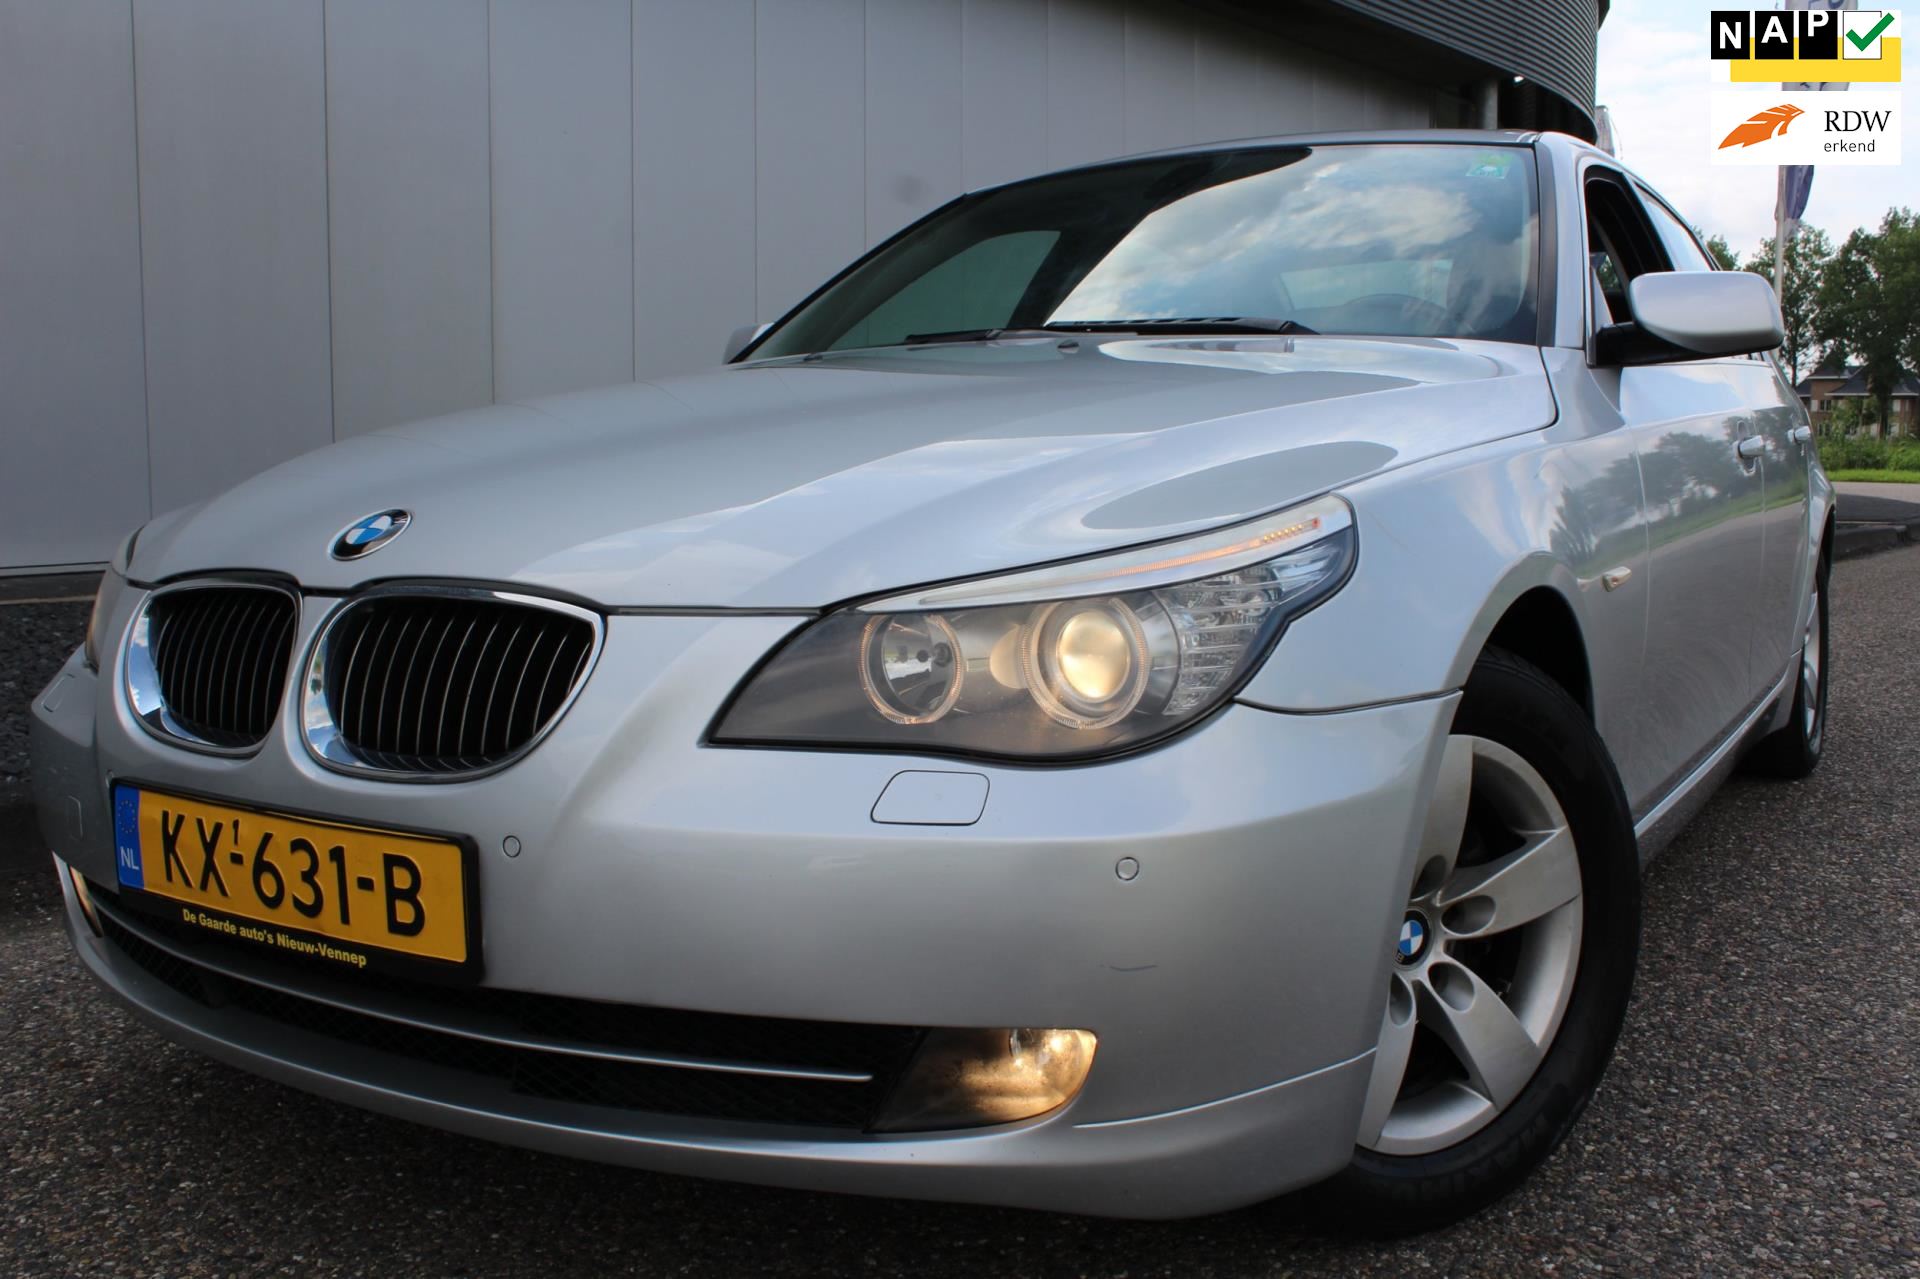 BMW 5-serie occasion - De Gaarde Auto's